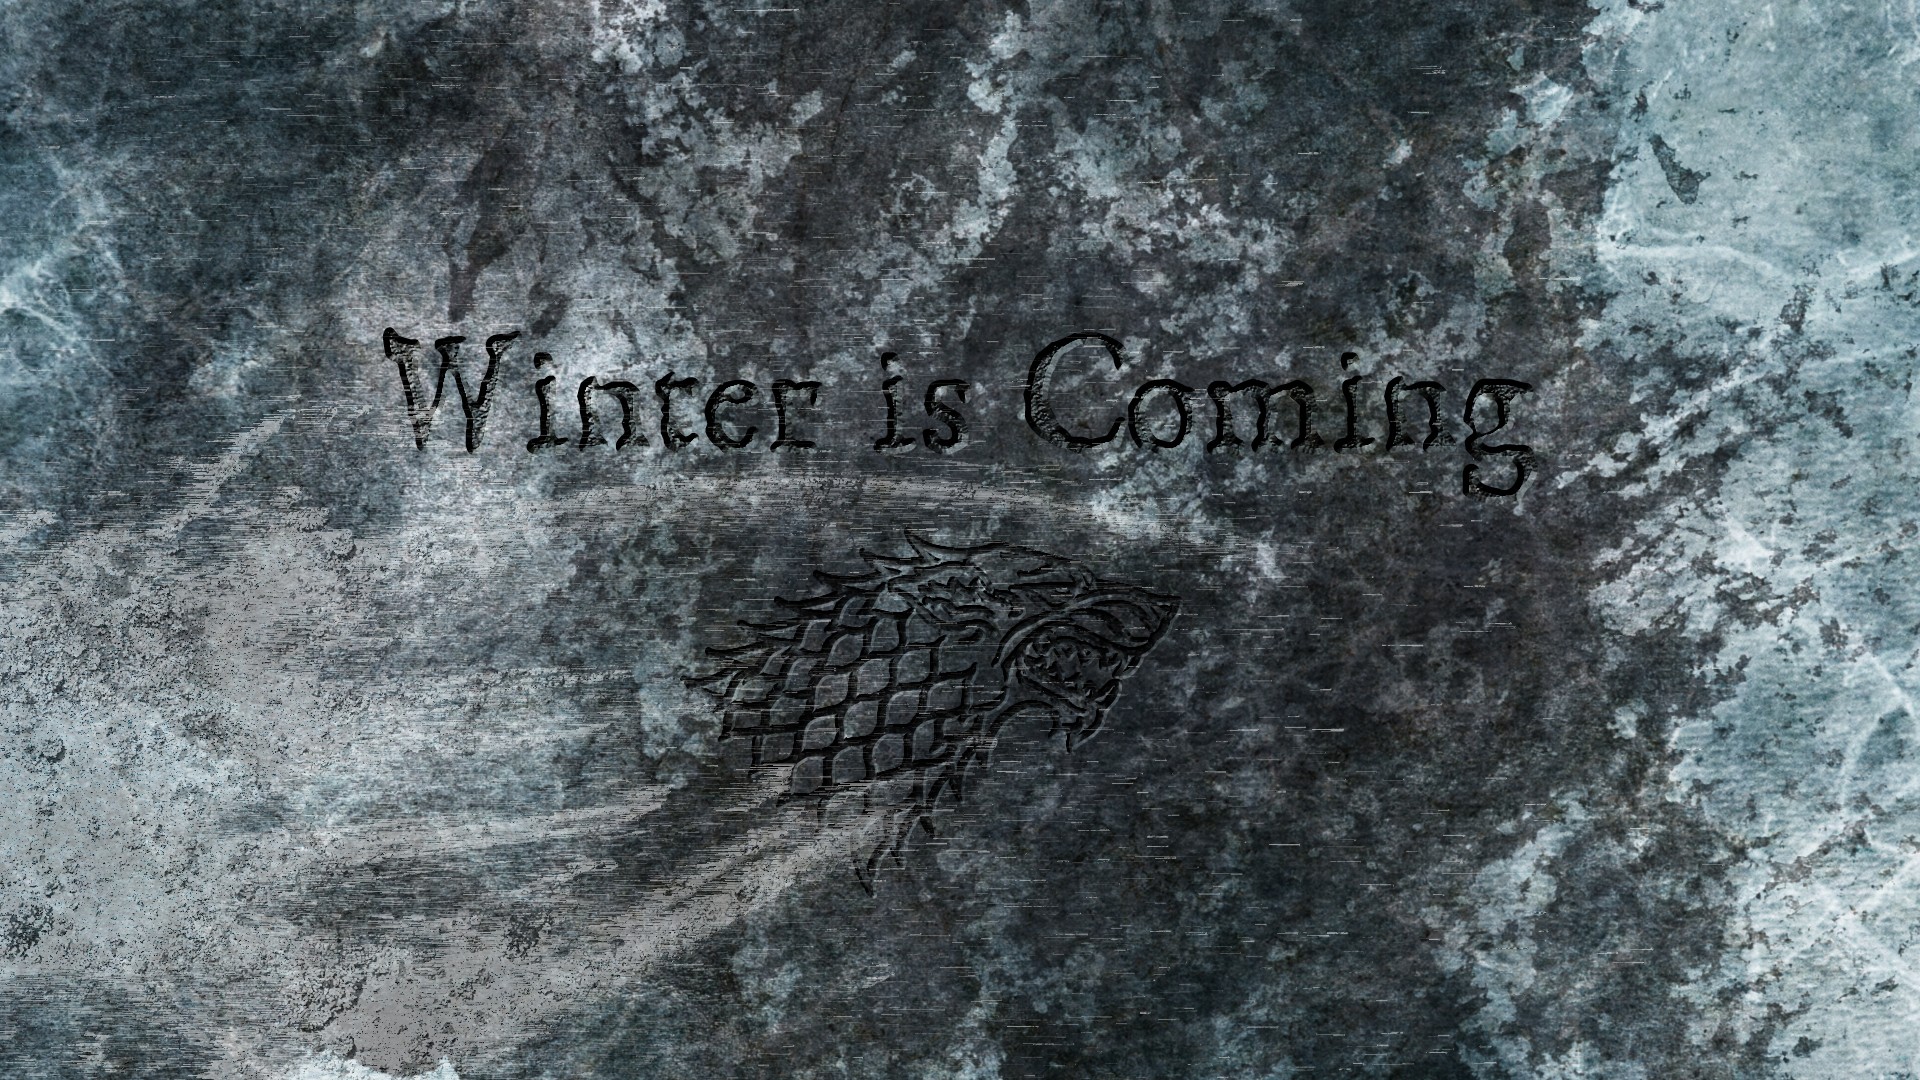 General 1920x1080 Game of Thrones House Stark Direwolf Winter Is Coming sigils TV series